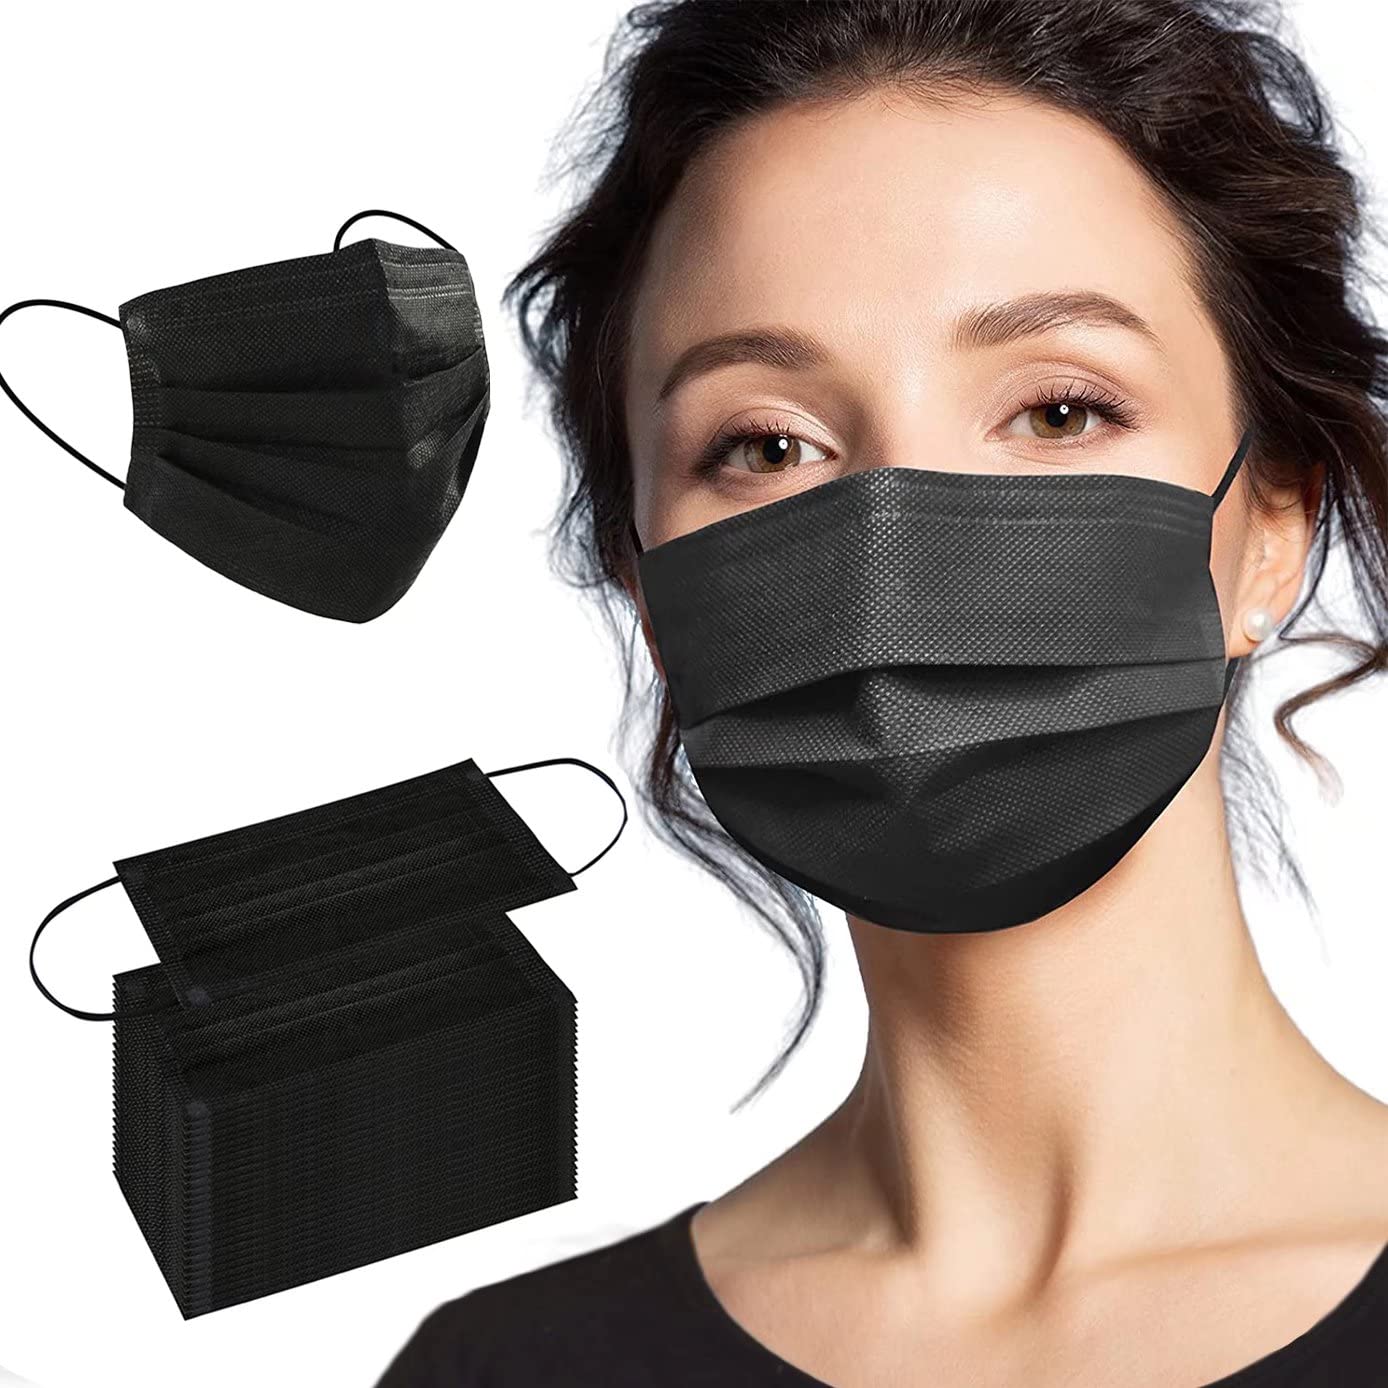 Face Mask 100PCS Adult Black Disposable Masks 3-Layer Filter Protection  Breathable Dust Masks with Elastic Ear Loop for Men Women Adult - Black  100pcs